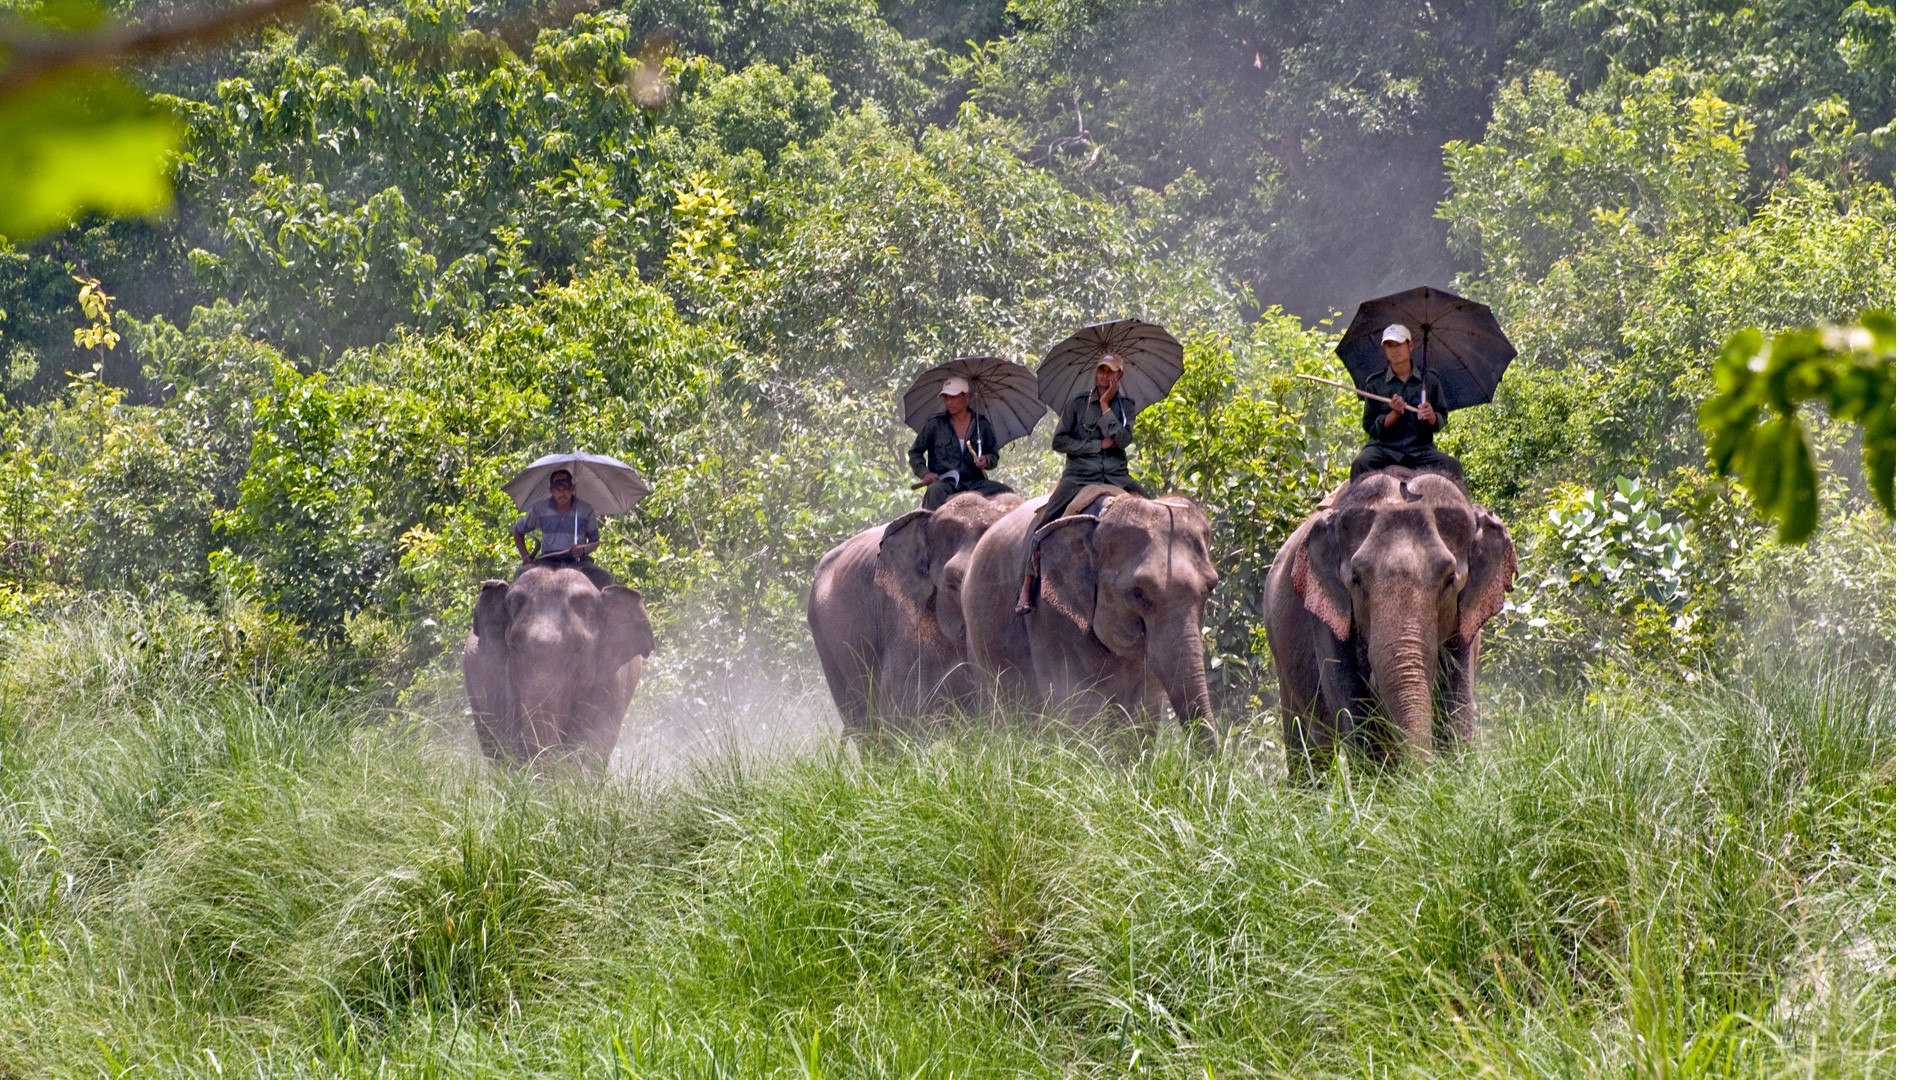 Bardiya National Park reopens for tourists